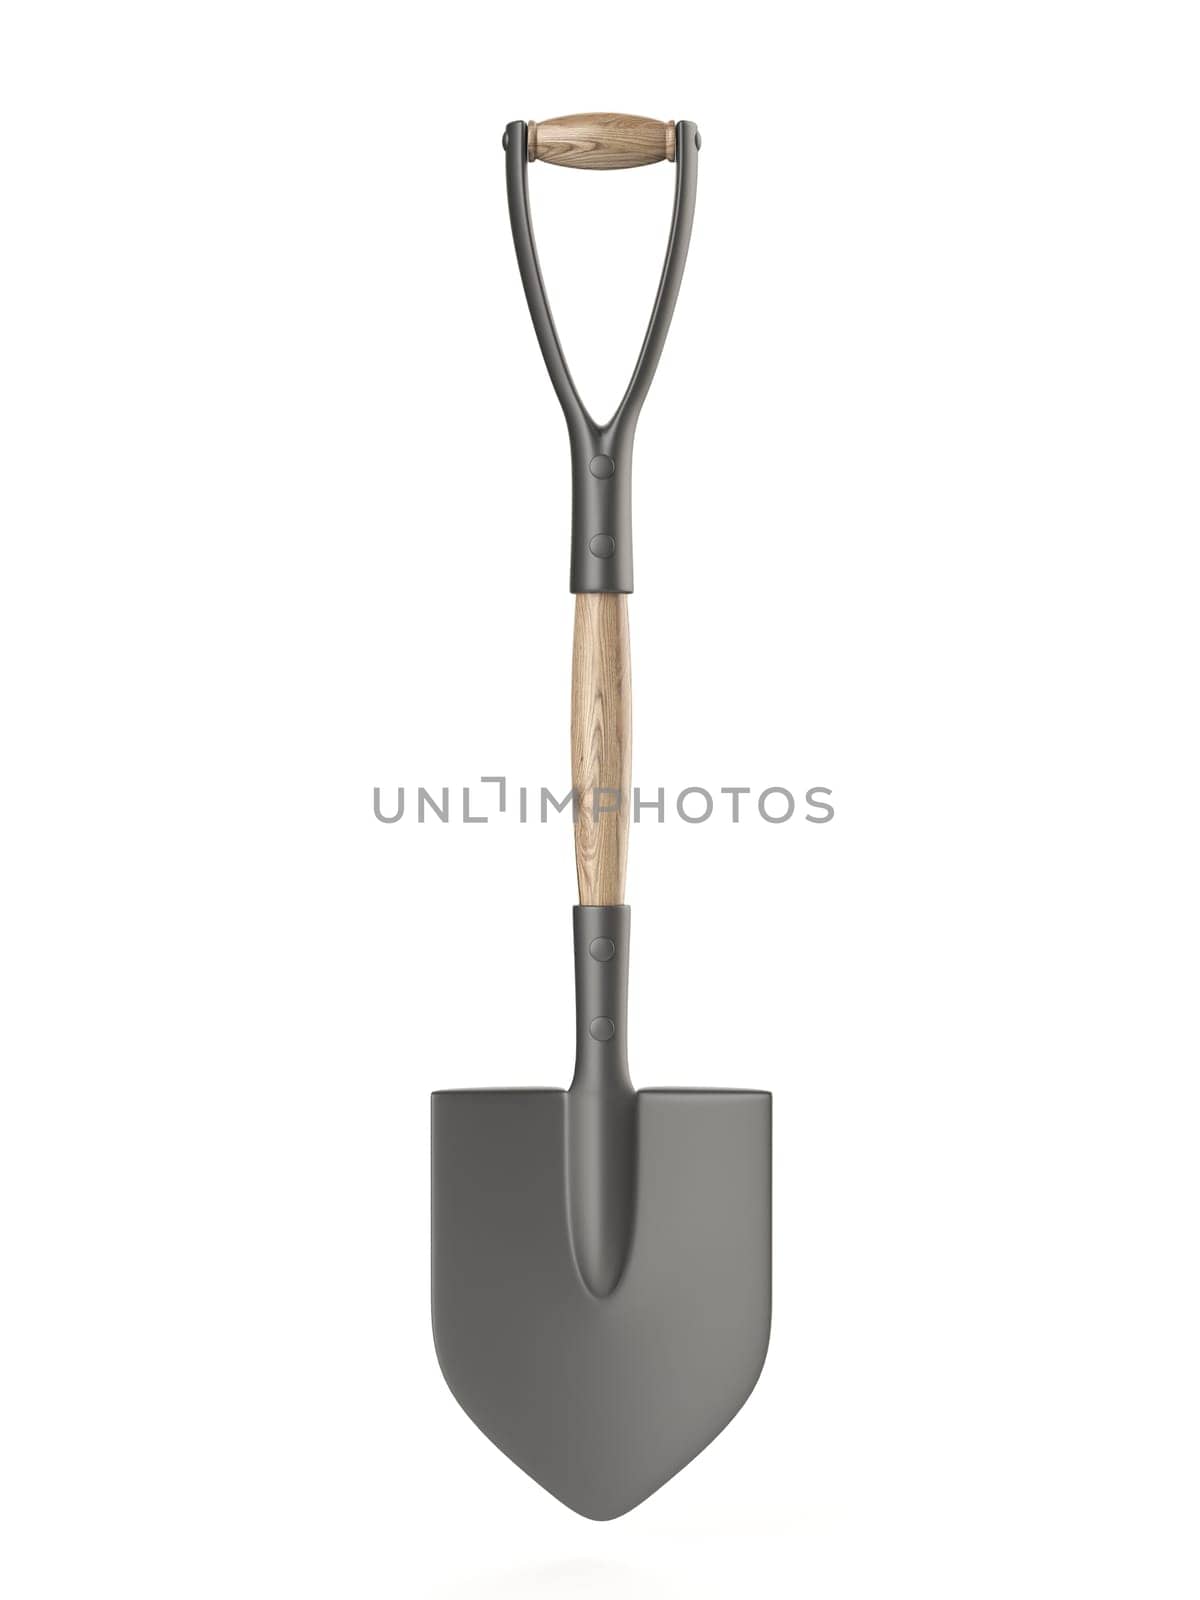 Hand tools shovel 3D rendering illustration isolated on white background